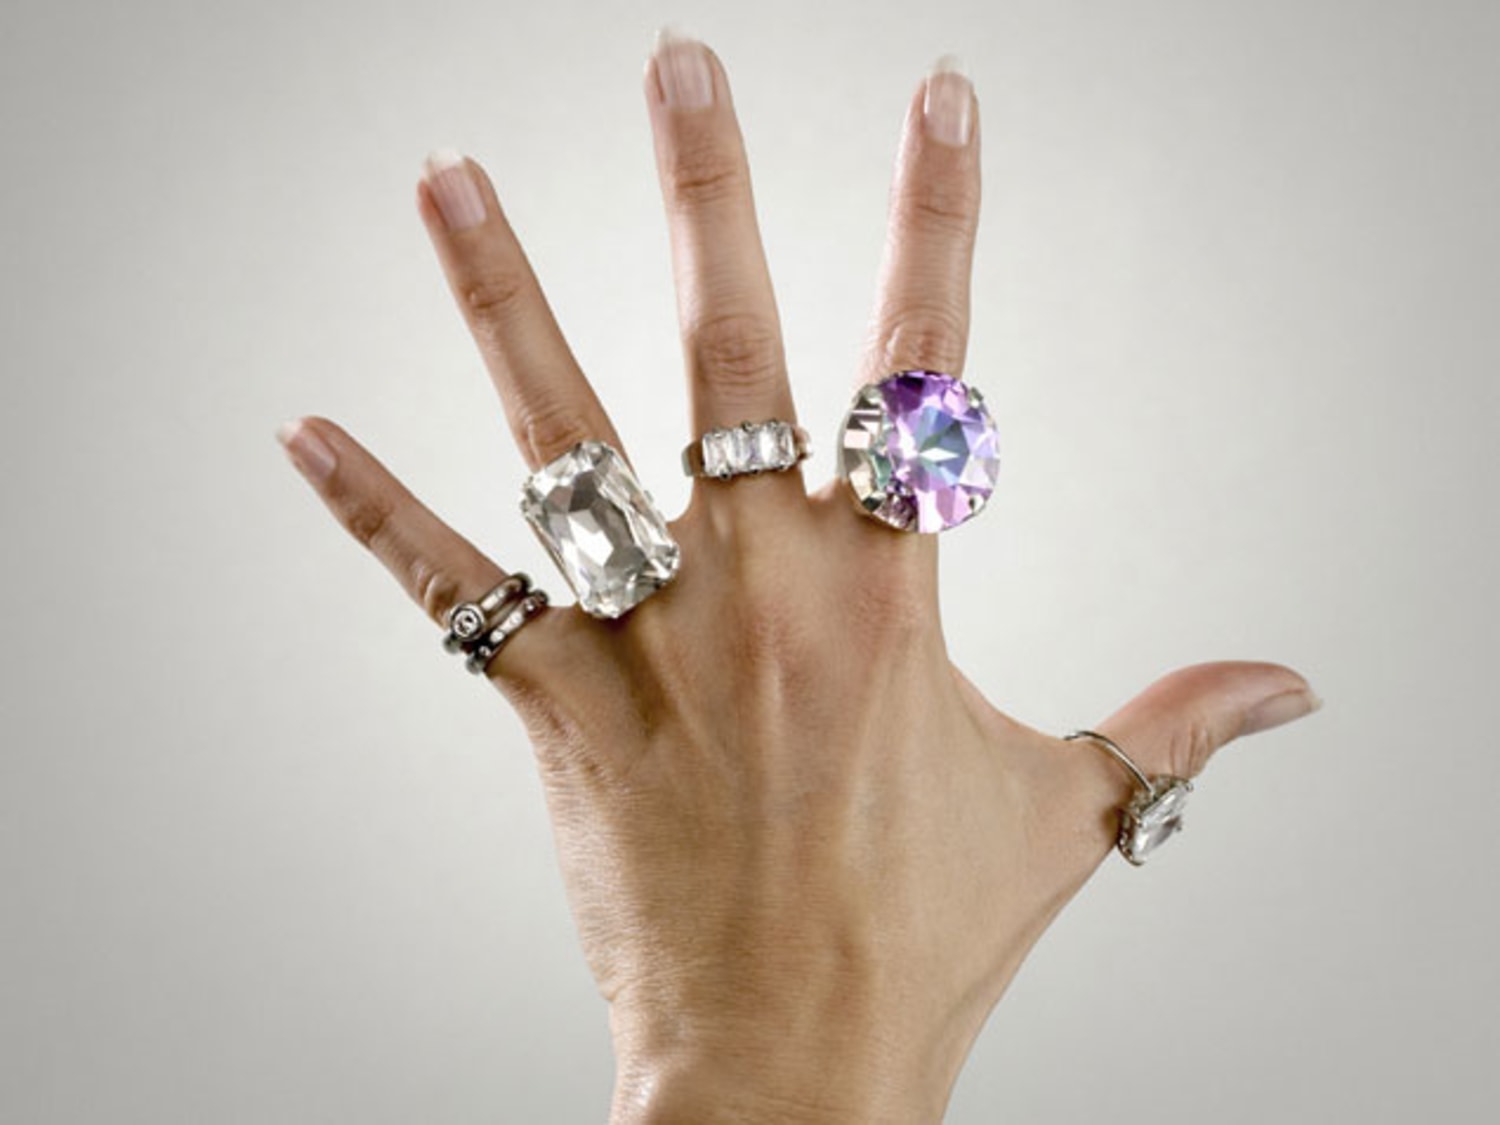 Does helzberg diamonds buy back jewelry